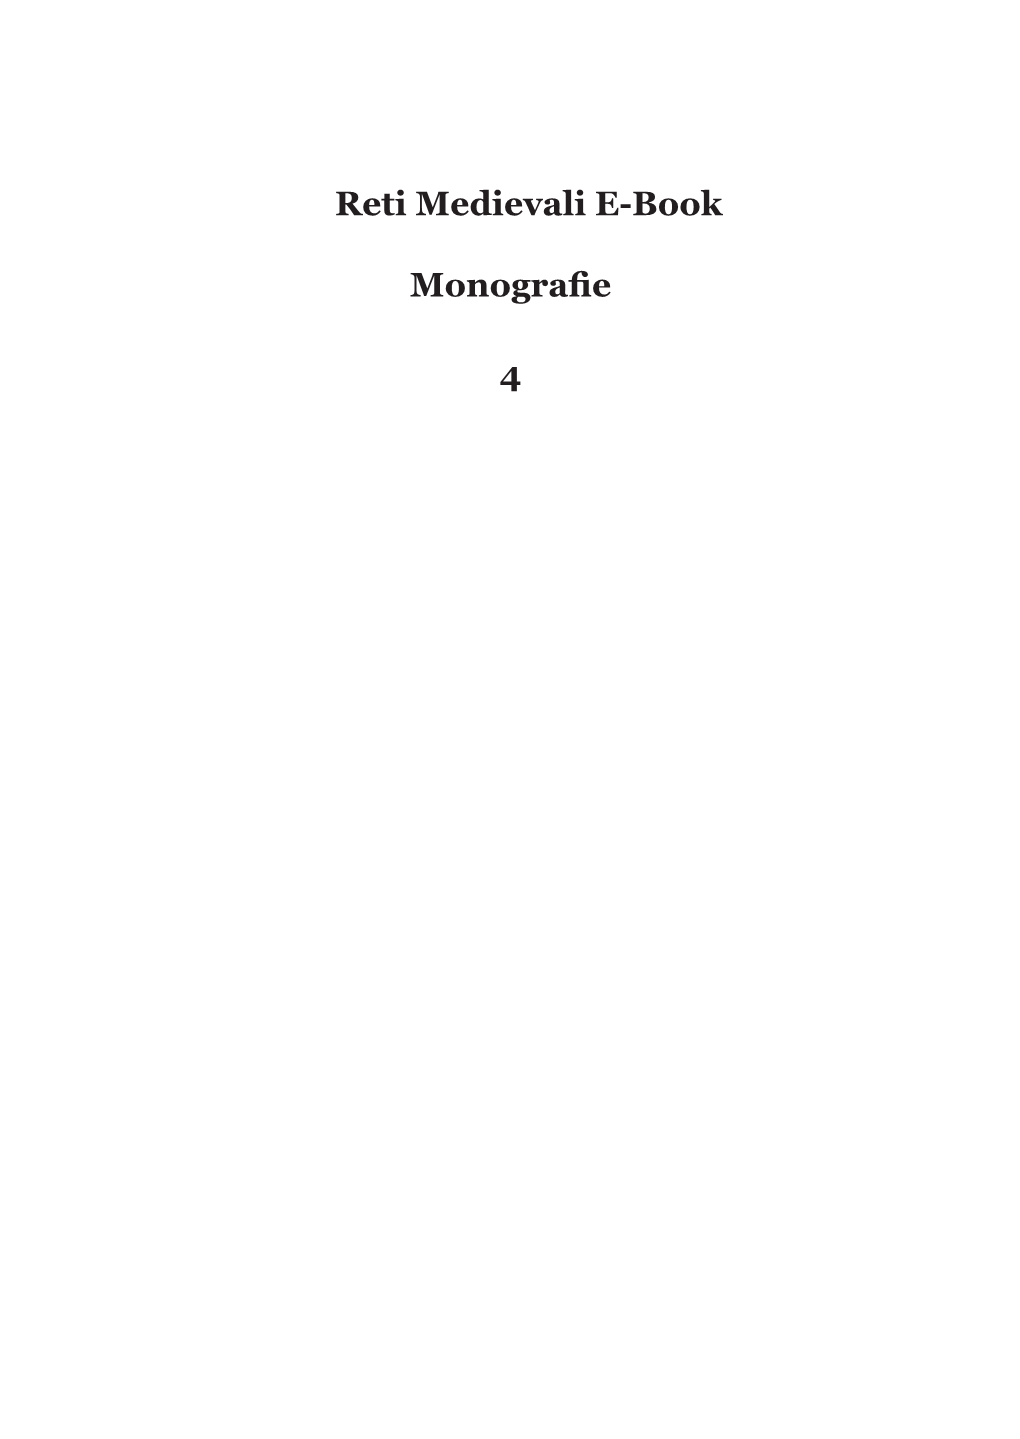 Reti Medievali E-Book Monografie 4